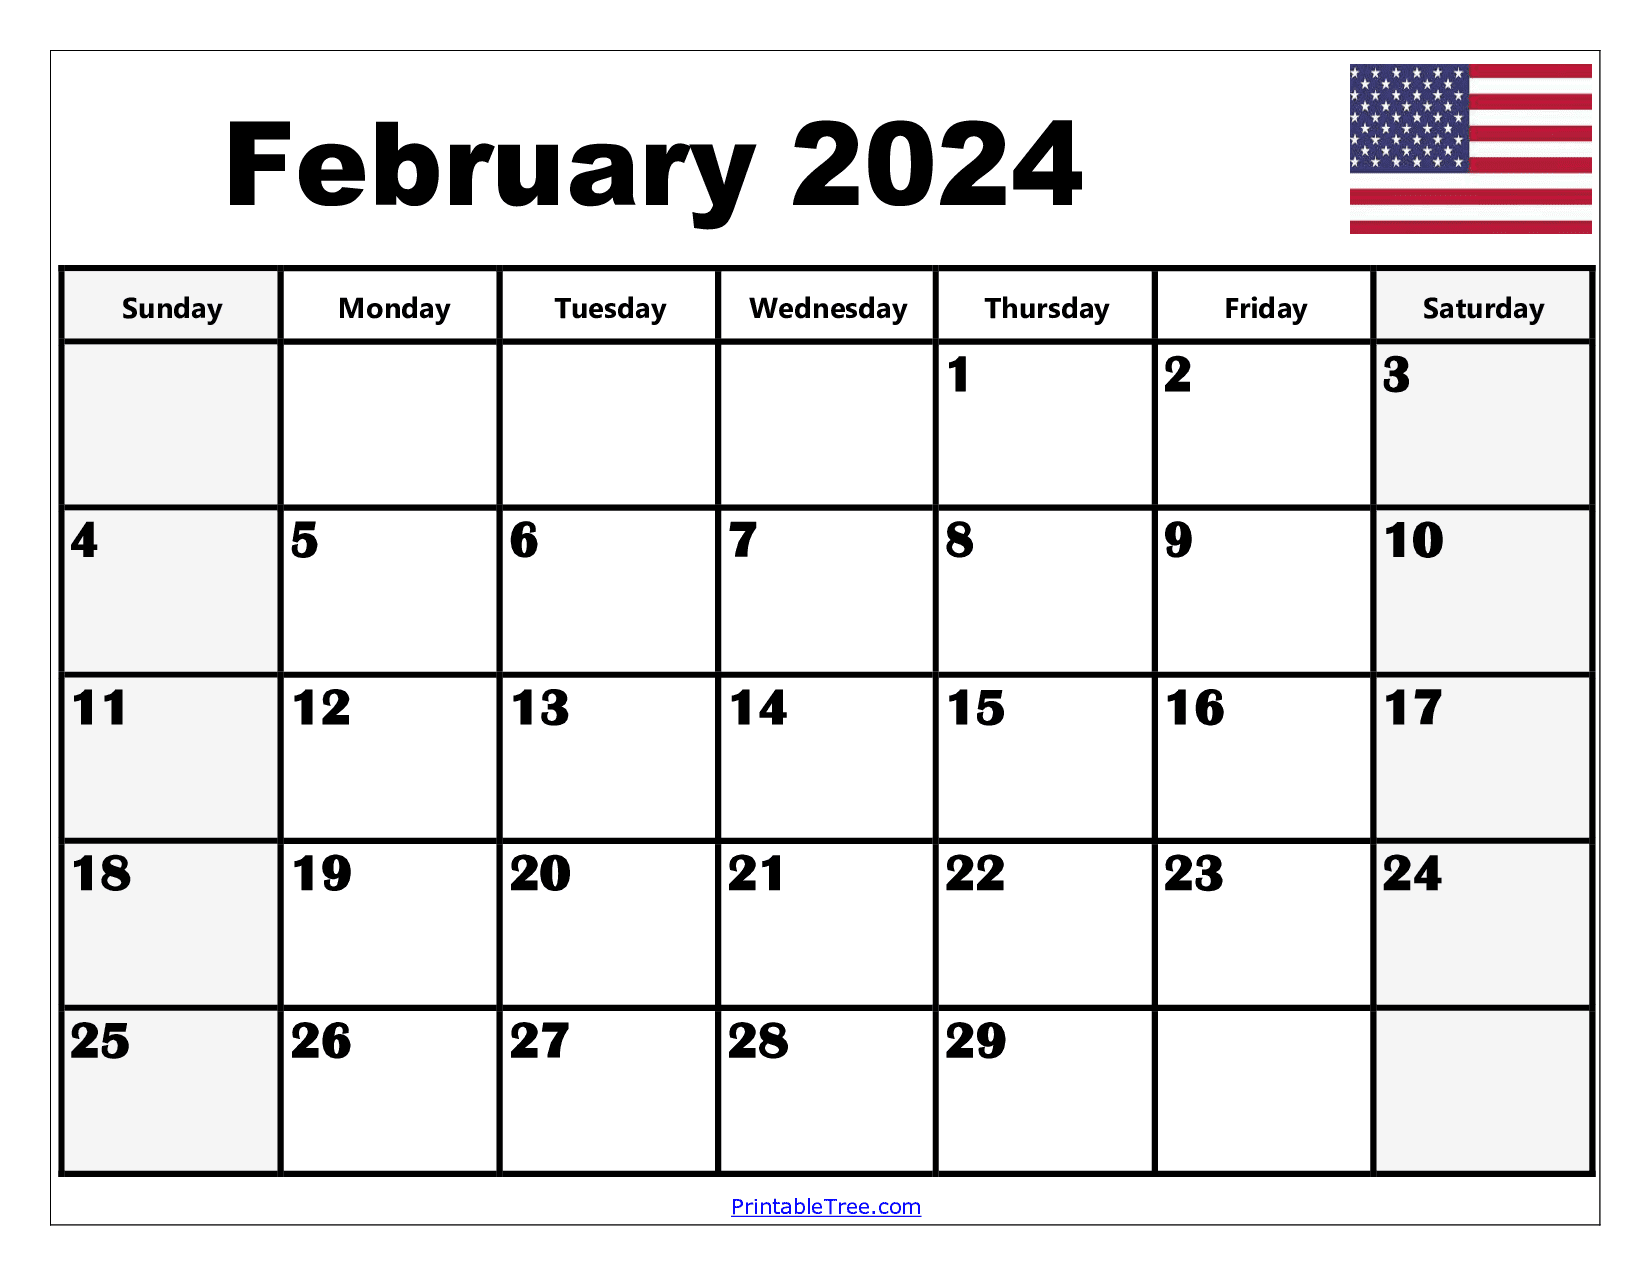 February 2024 Calendar Printable Pdf Template With Holidays for February 2024 Calendar With Holidays Free Printable